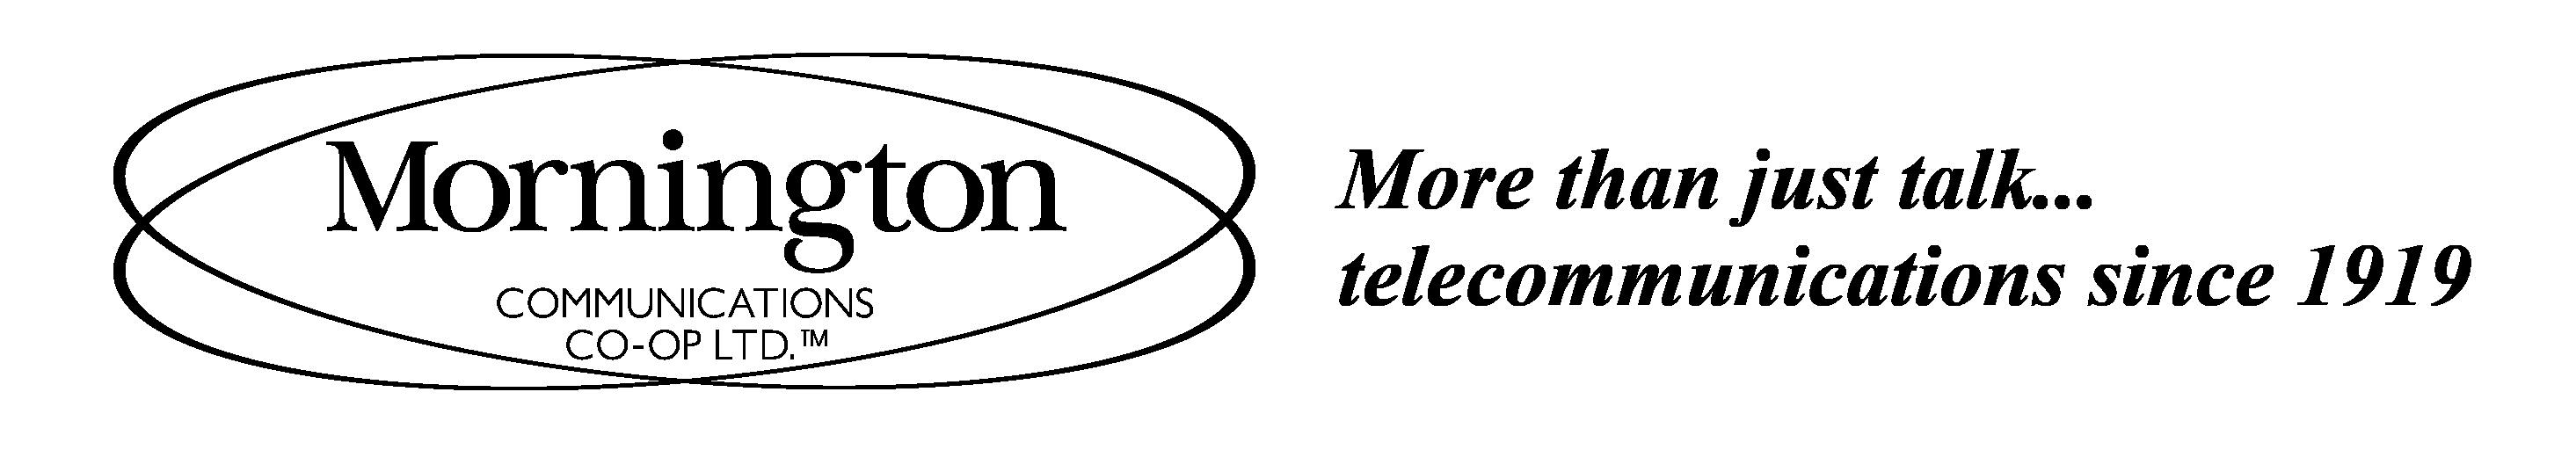 Mornington Communications logo